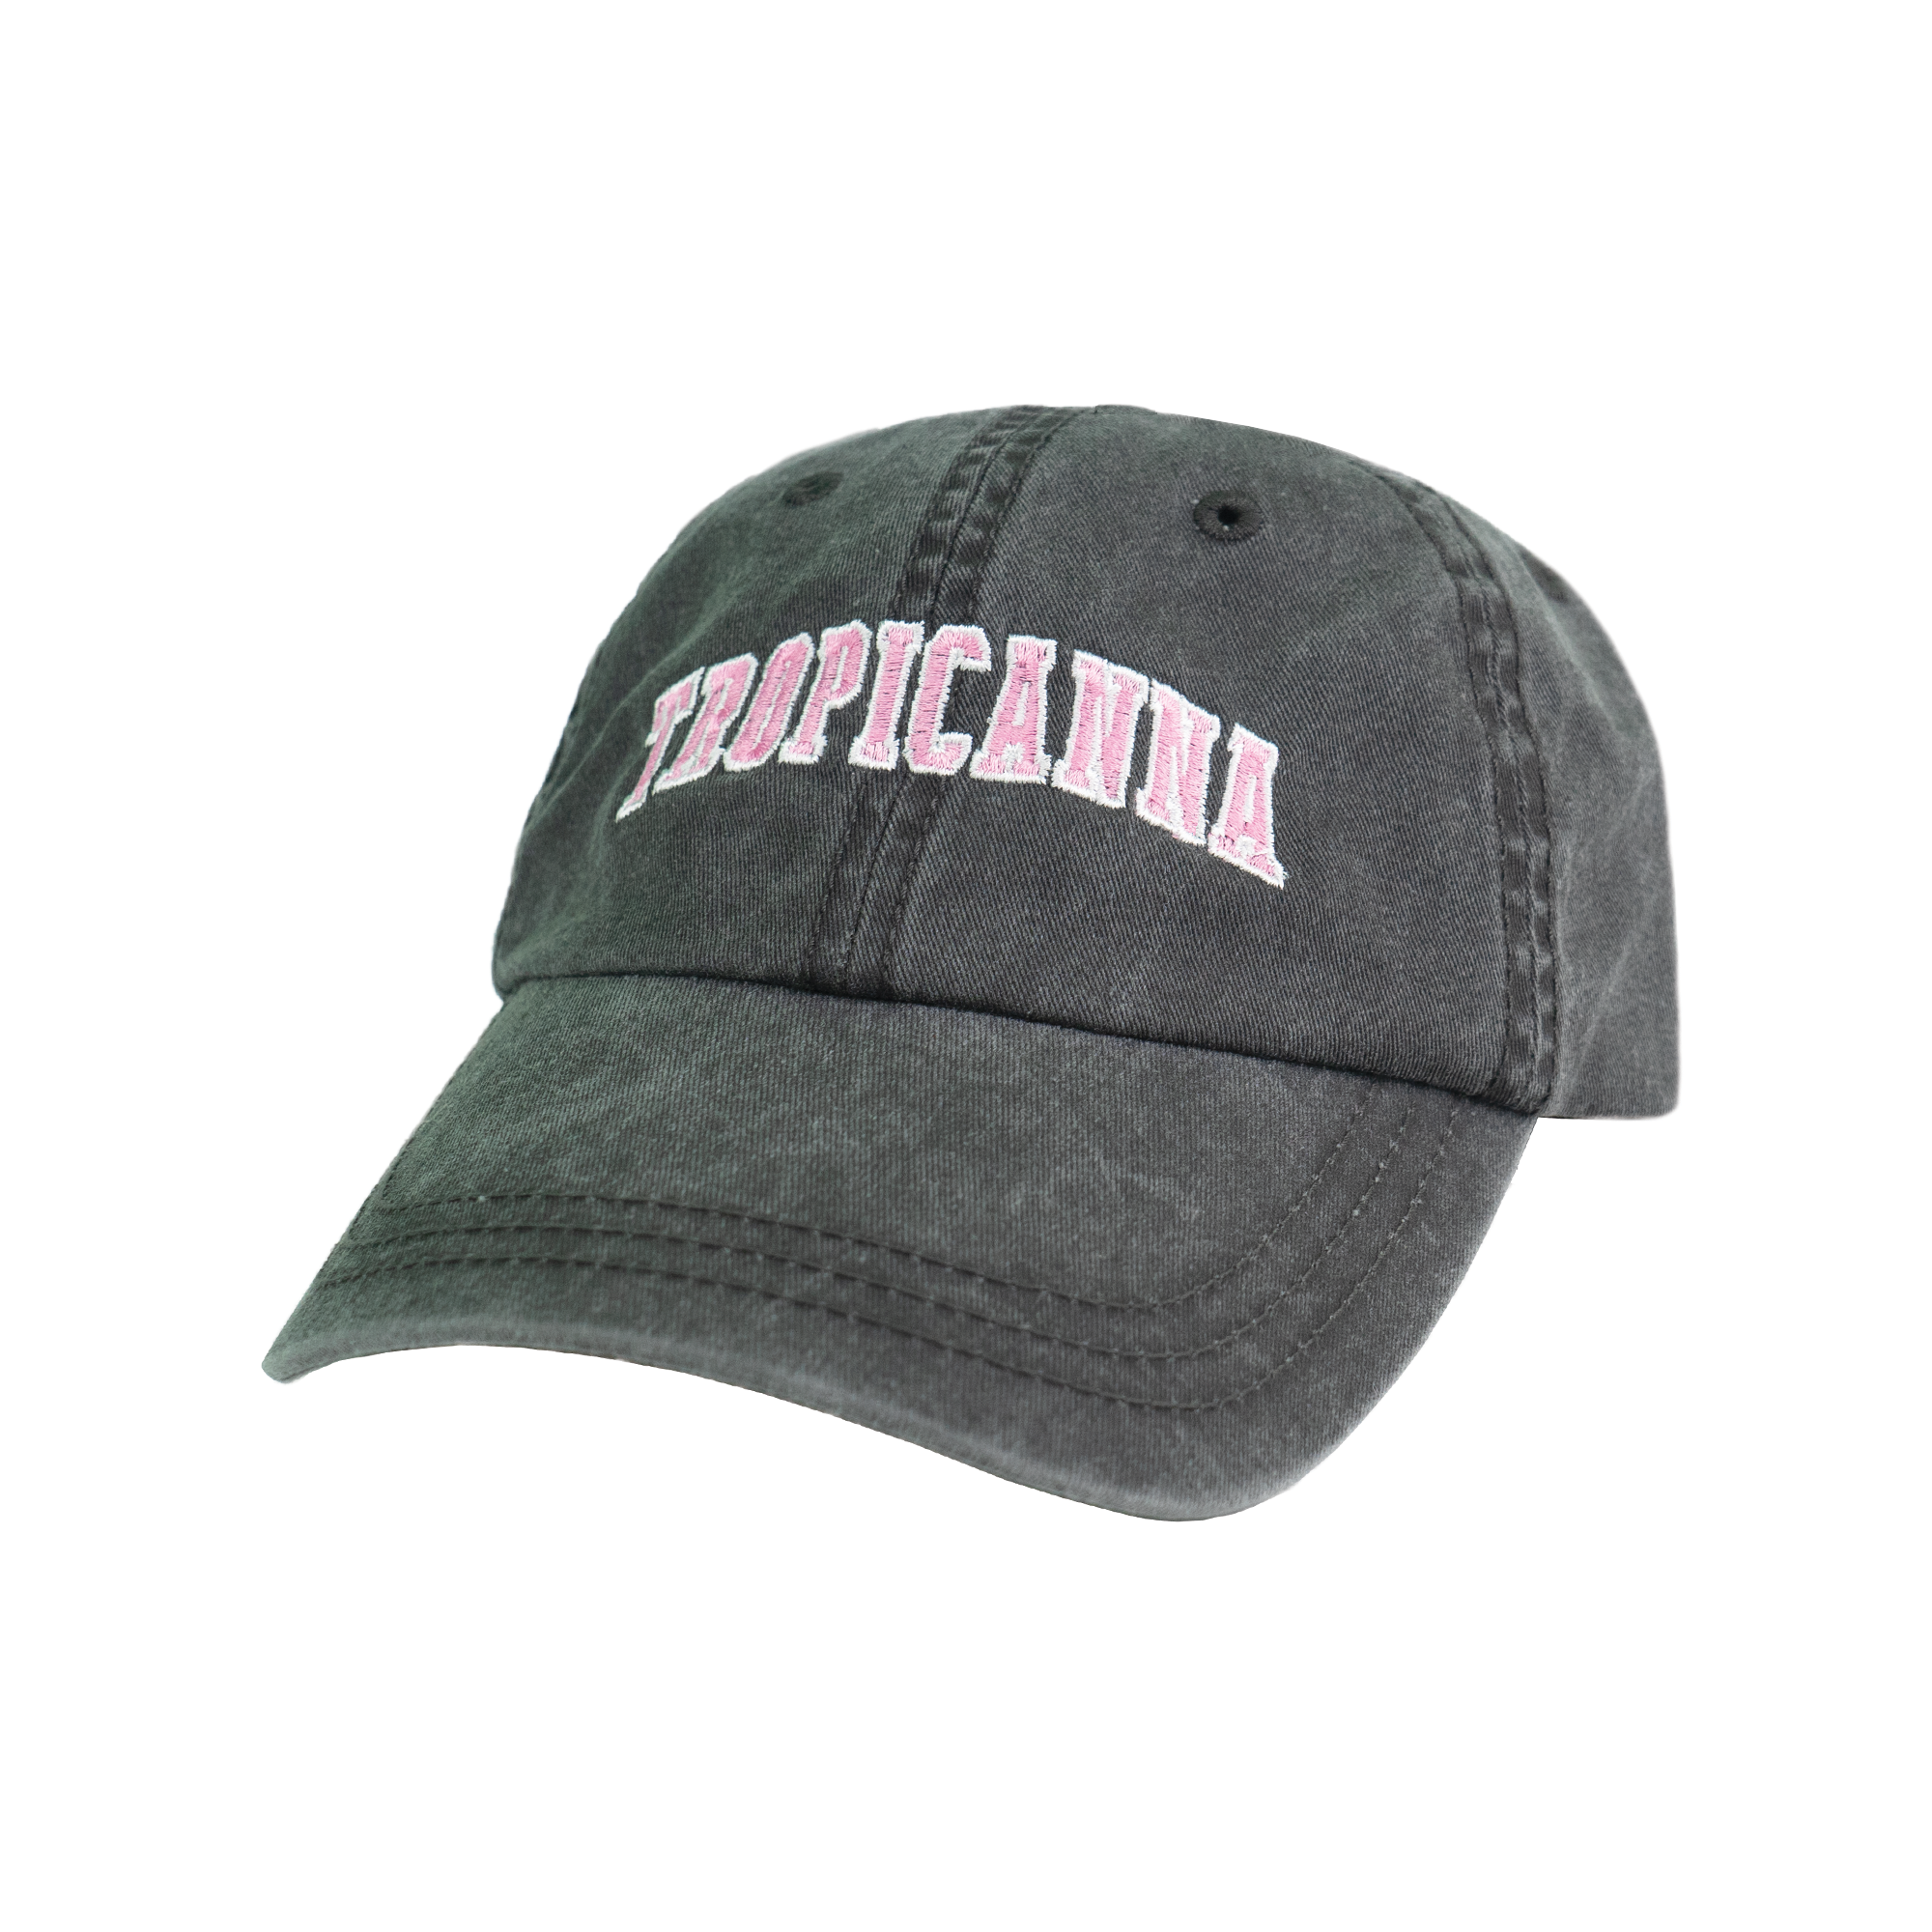 College Dad Hat - Black/Pink